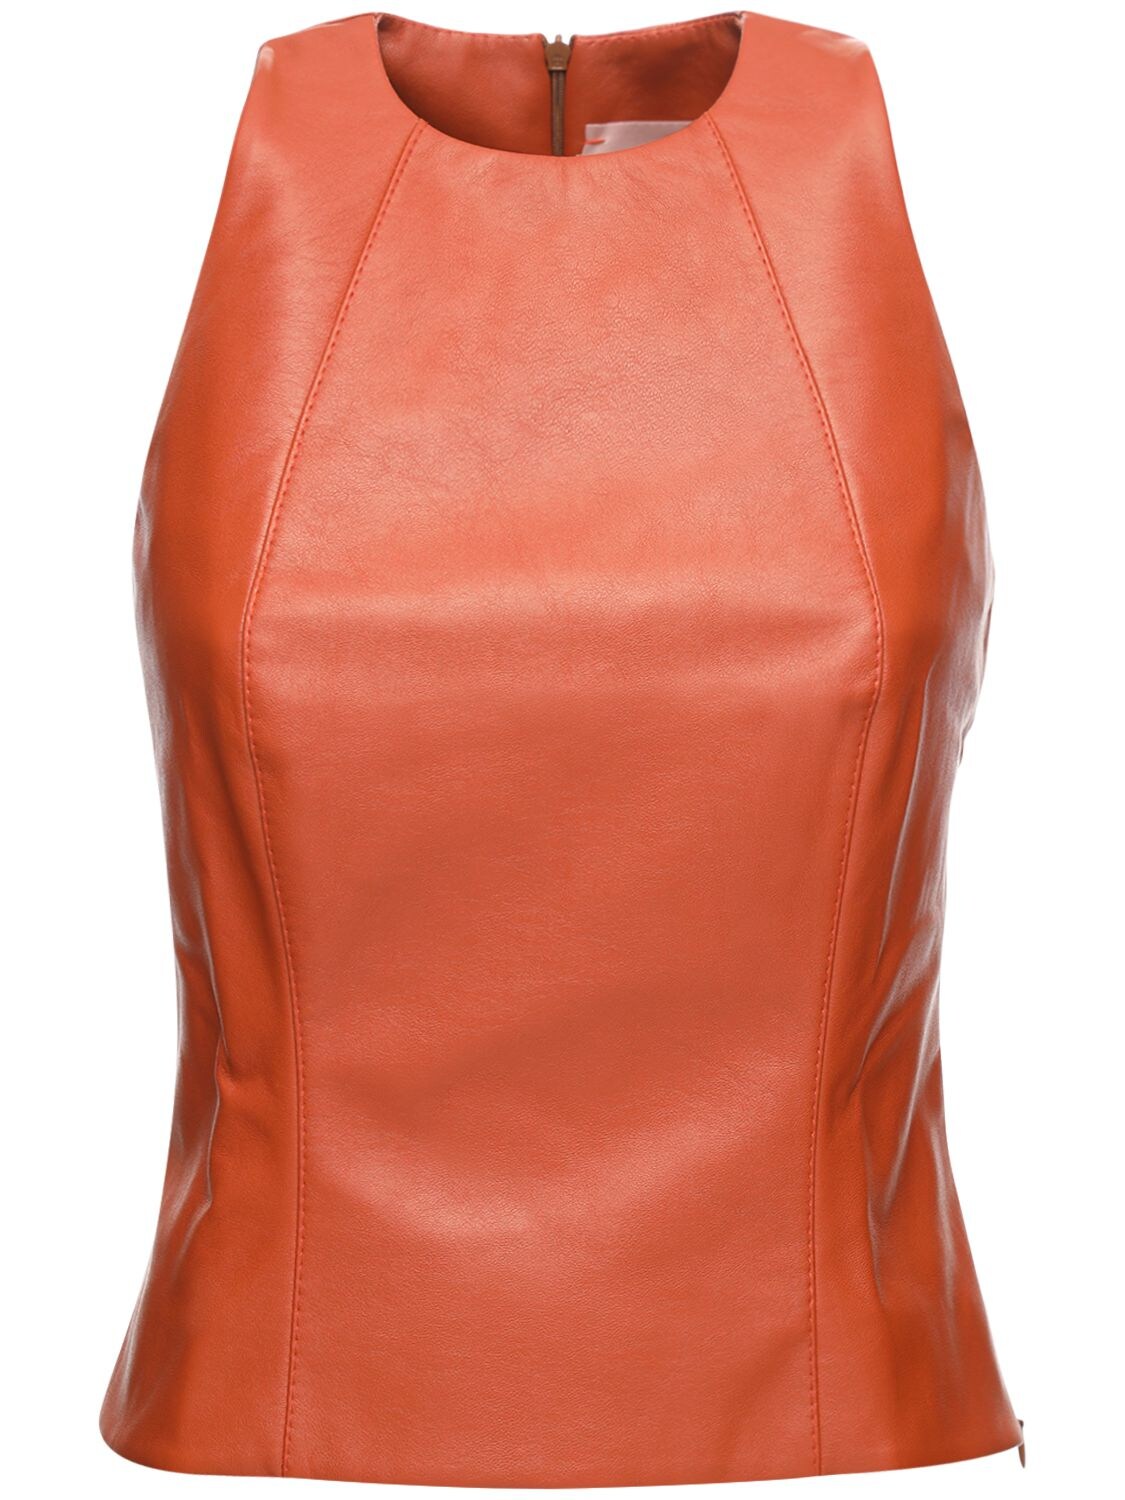 Liya Sleeveless Faux Leather Top In Orange